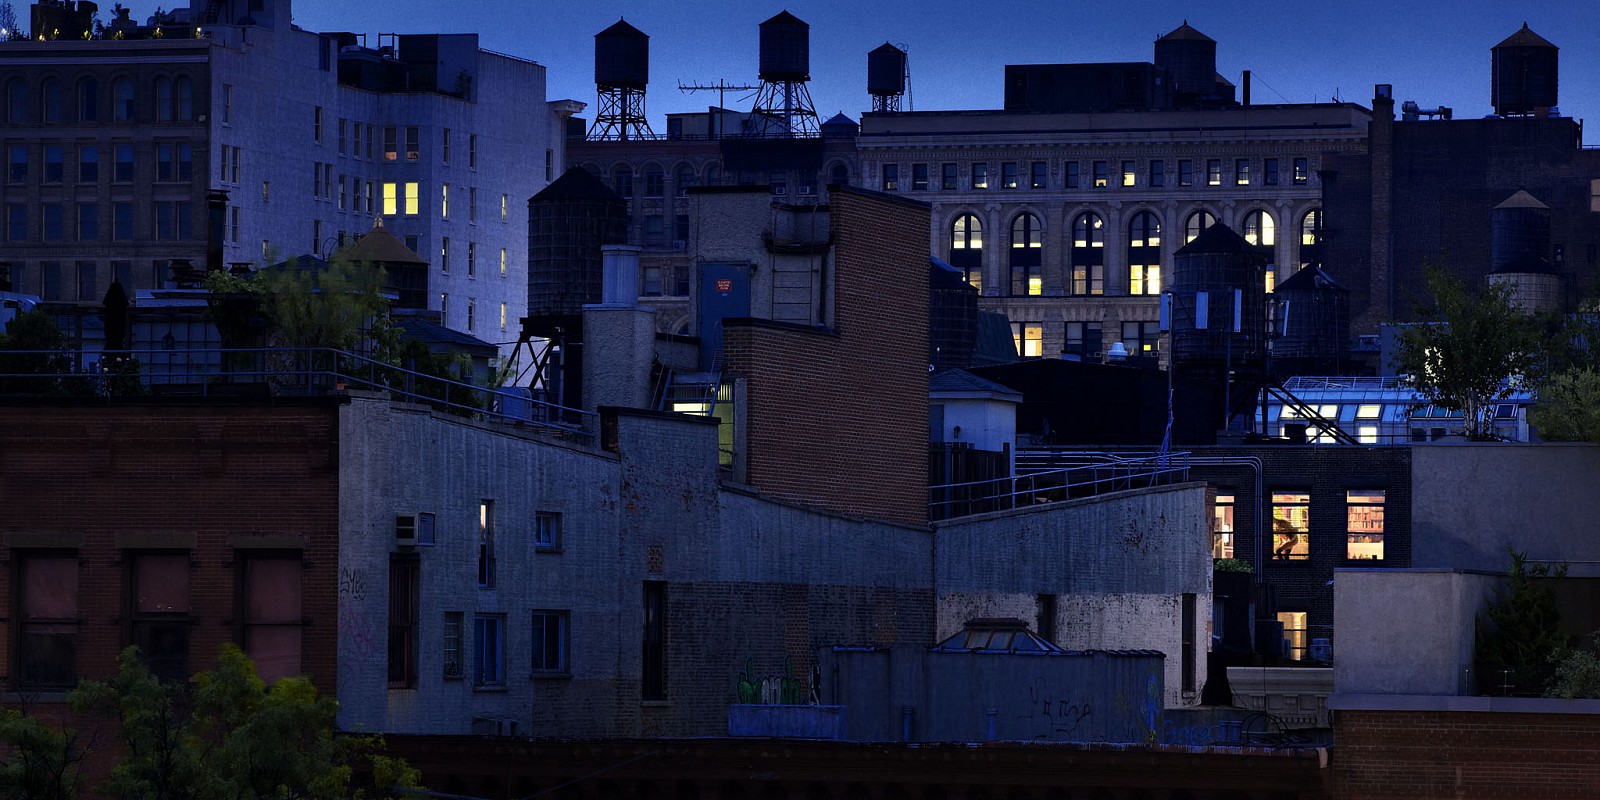 David Drebin, Gotham City, 2010
Digital C Print, 20 x 40 inches; 30 x 60 inches; 40 x 80 inches